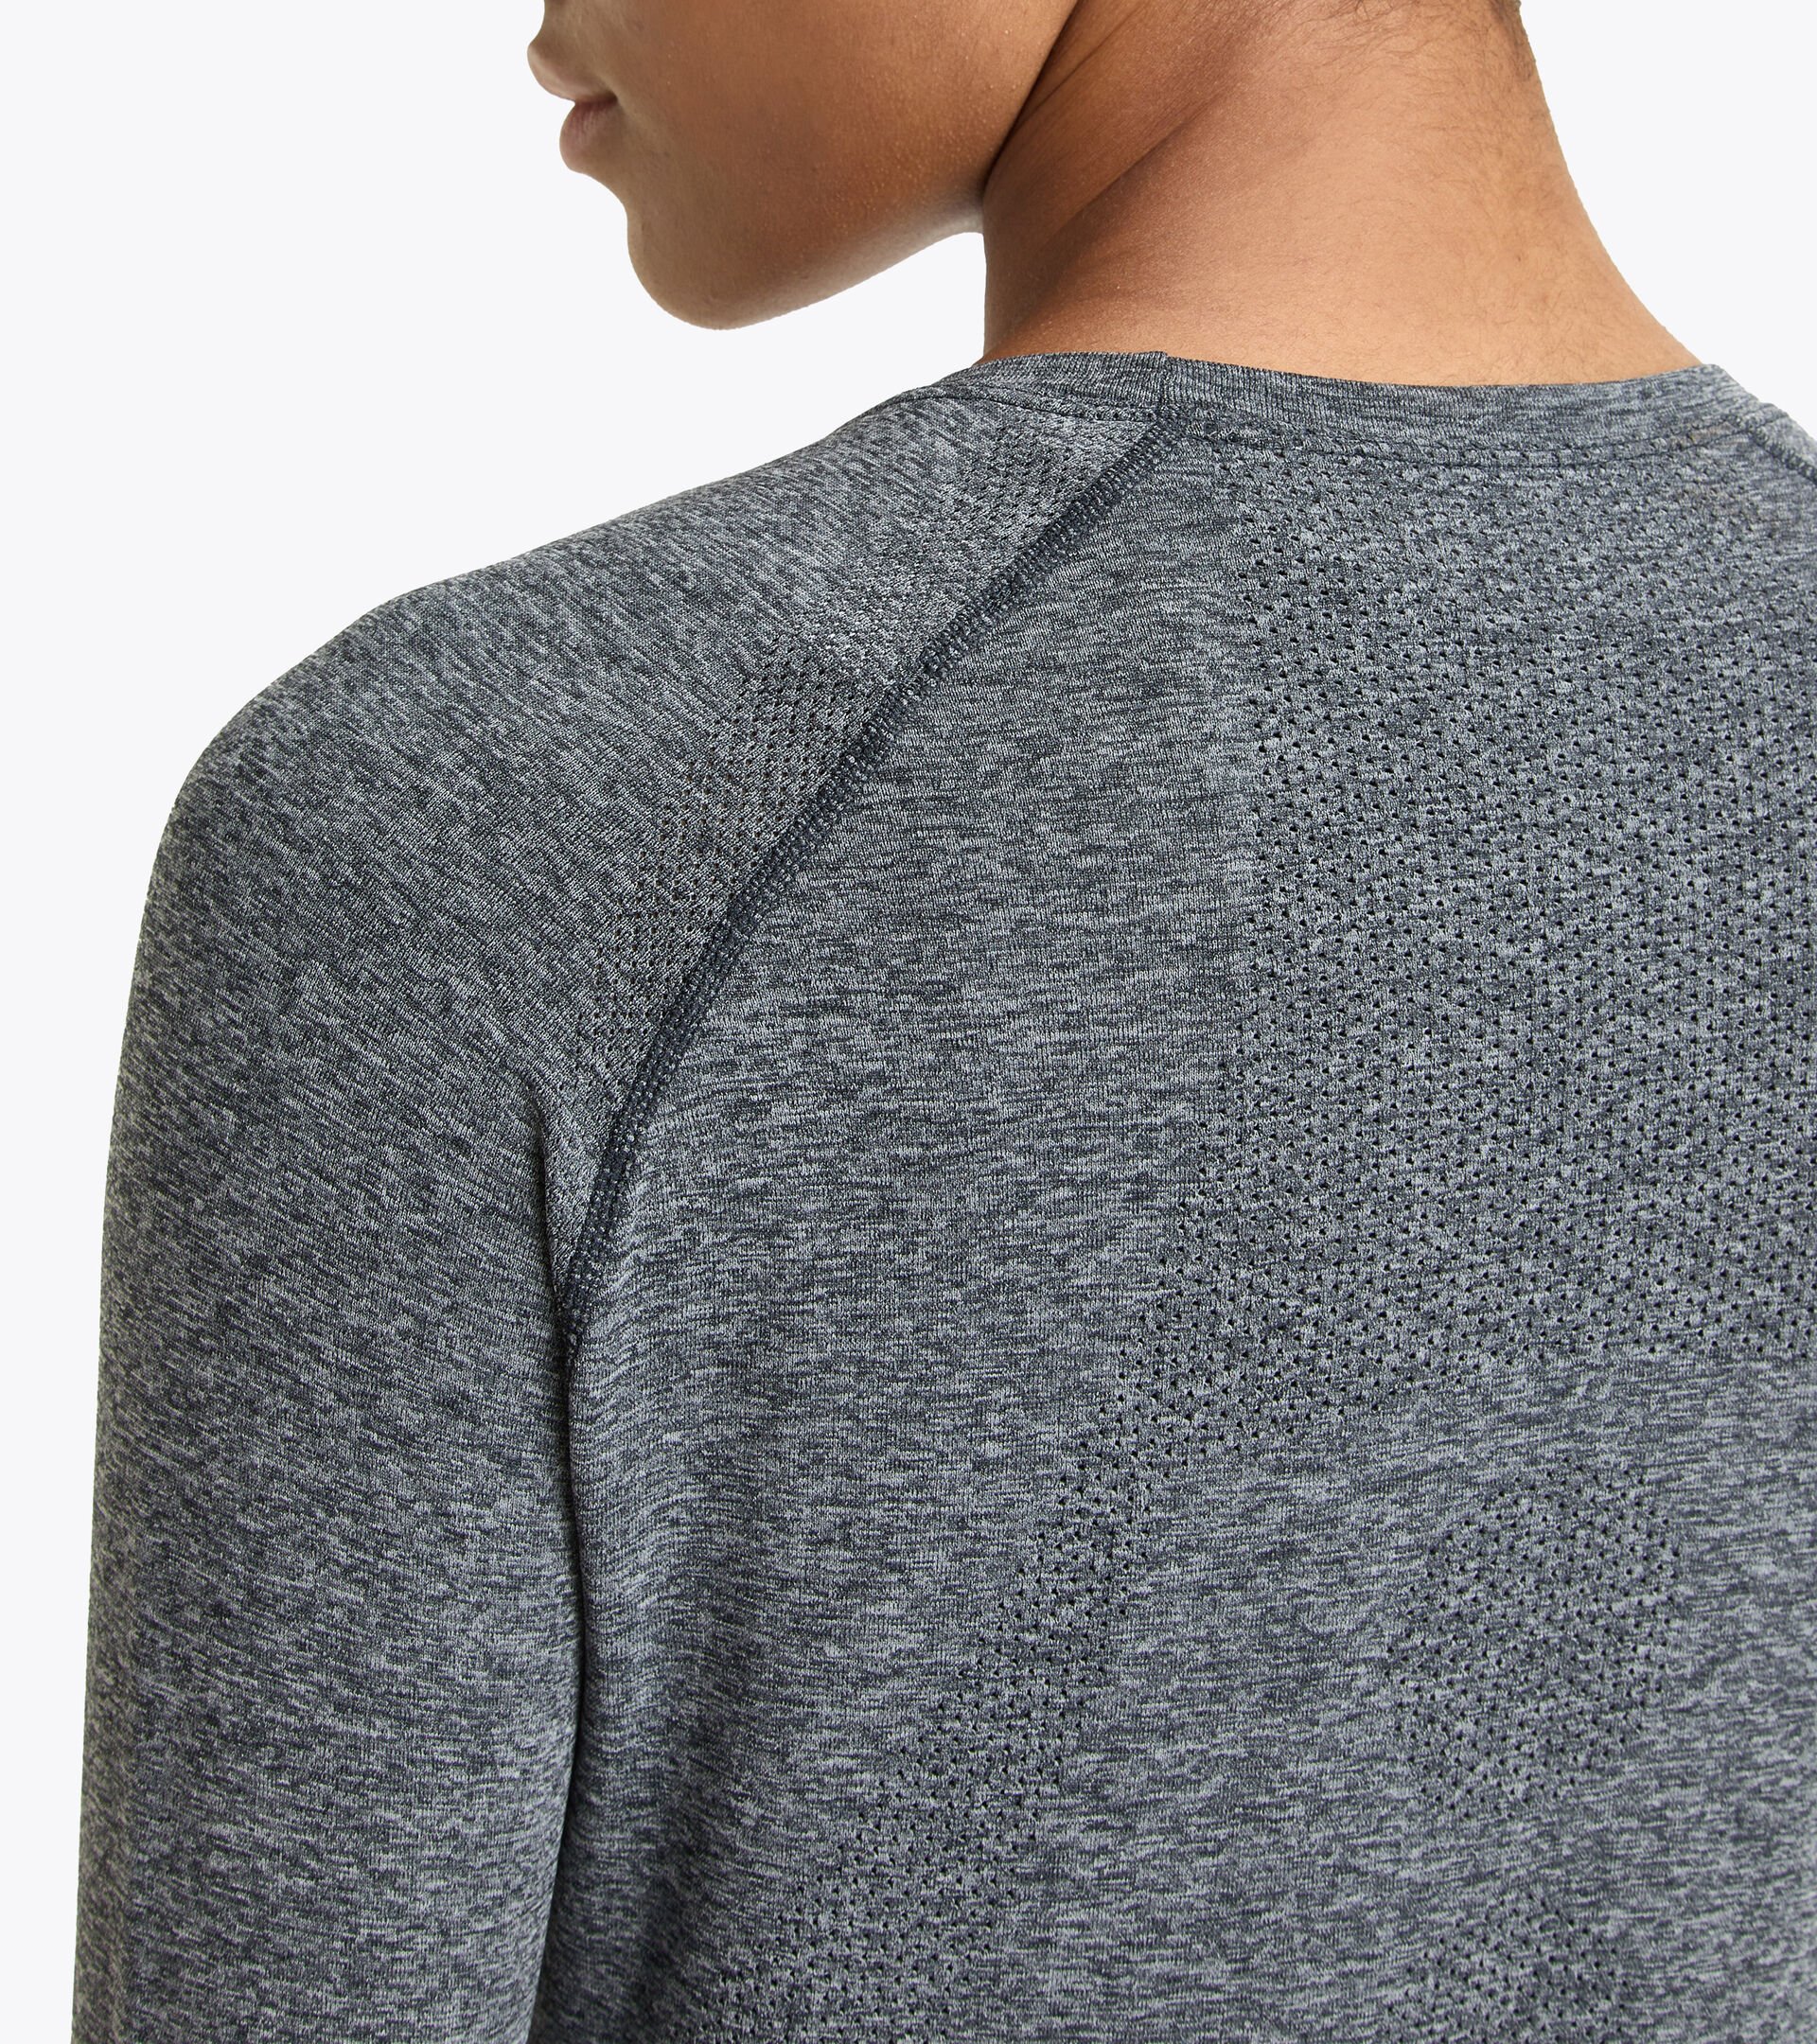 Long-sleeved thermal shirt - Women L. LS T-SHIRT SKIN FRIENDLY BLACK - Diadora